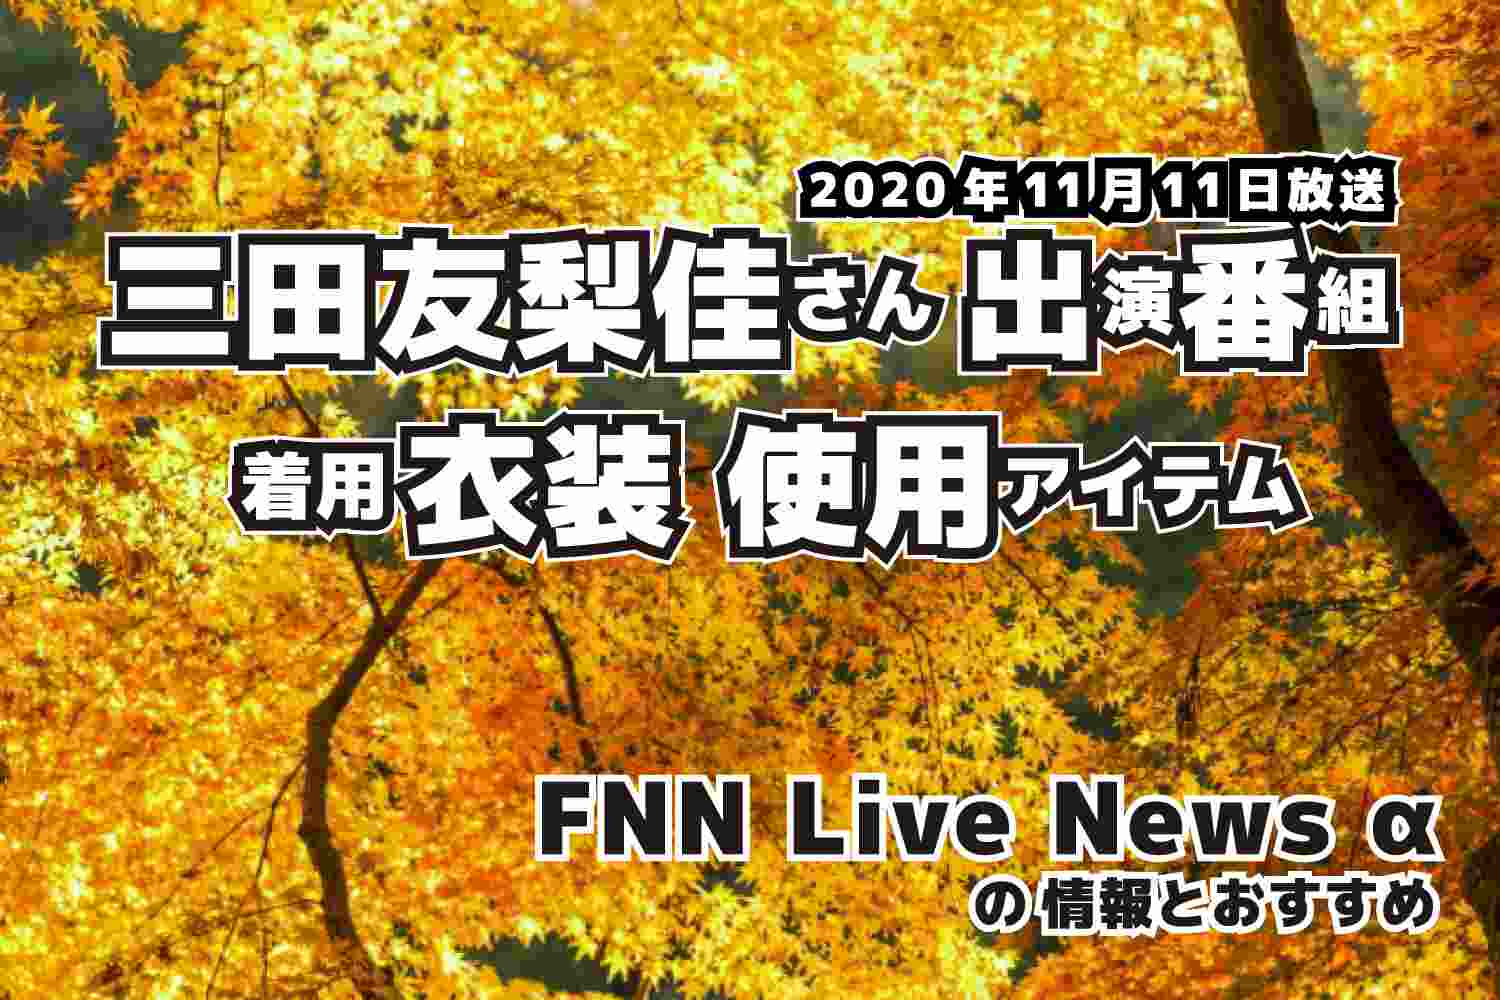 FNN Live News α　三田友梨佳さん 　衣装　2020年11月11日放送